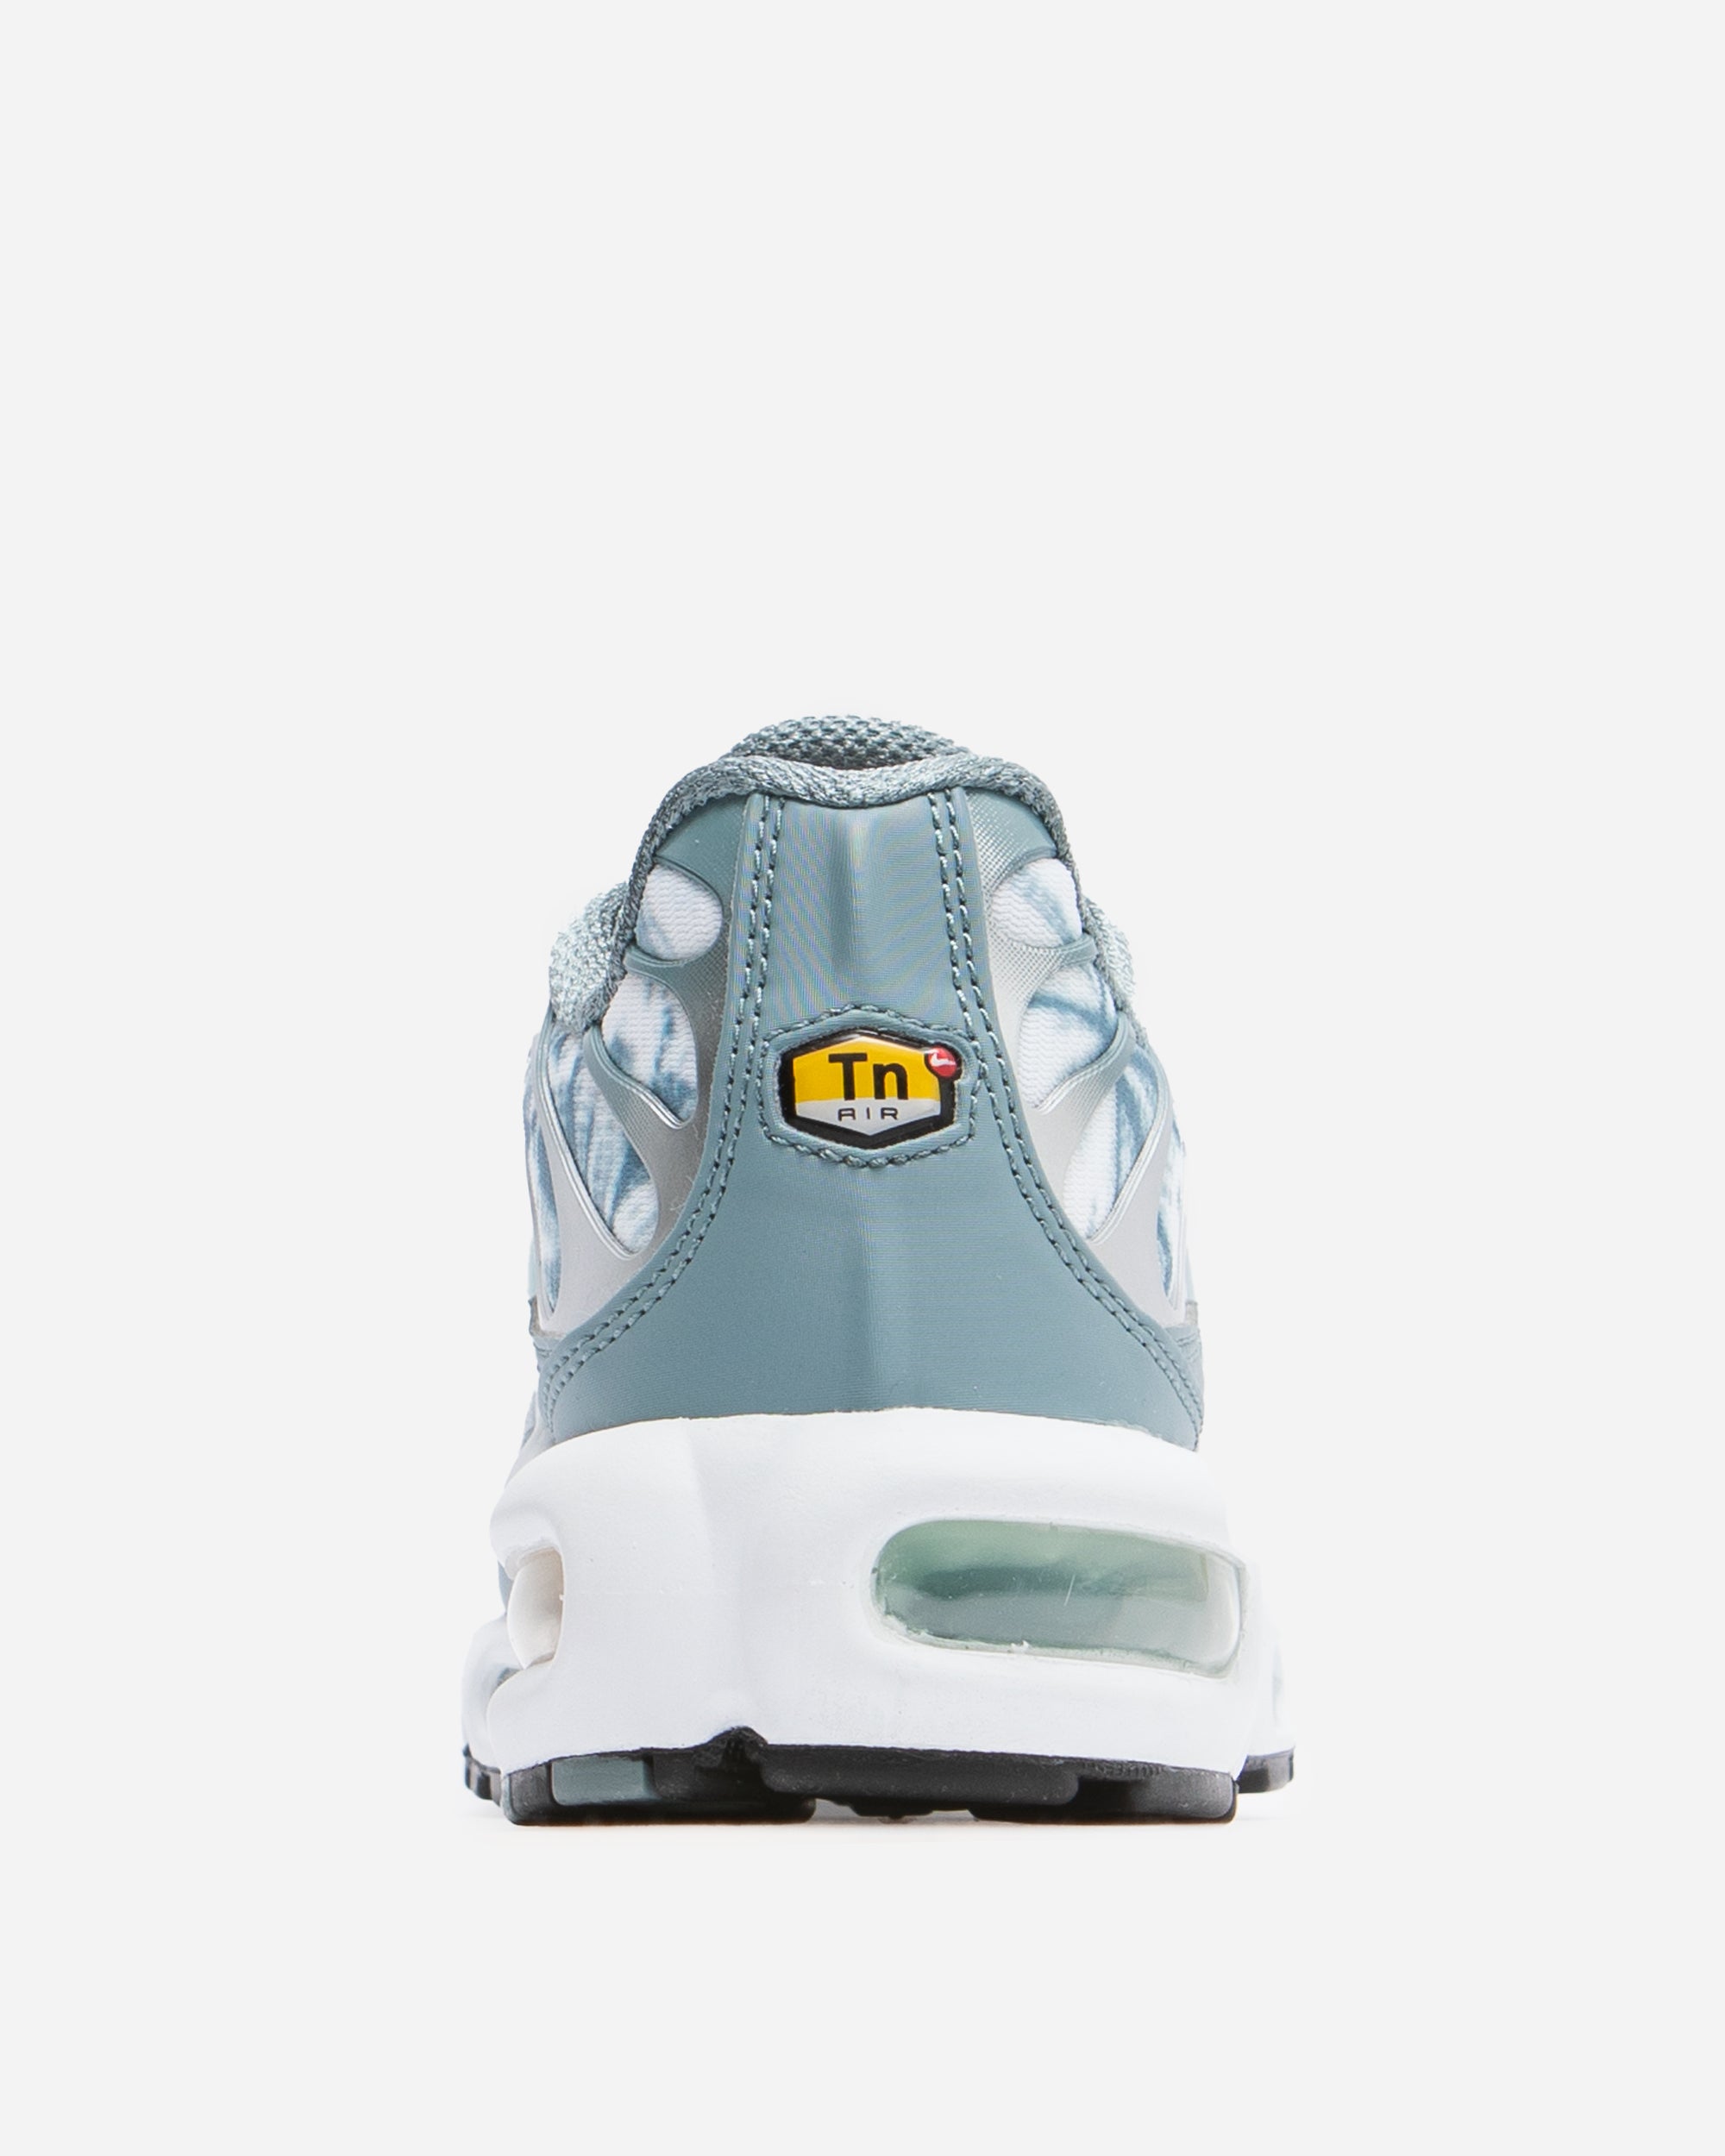 Nike Air Max Plus WATERWAY/FIBERGLASS-WHITE FV0394-300